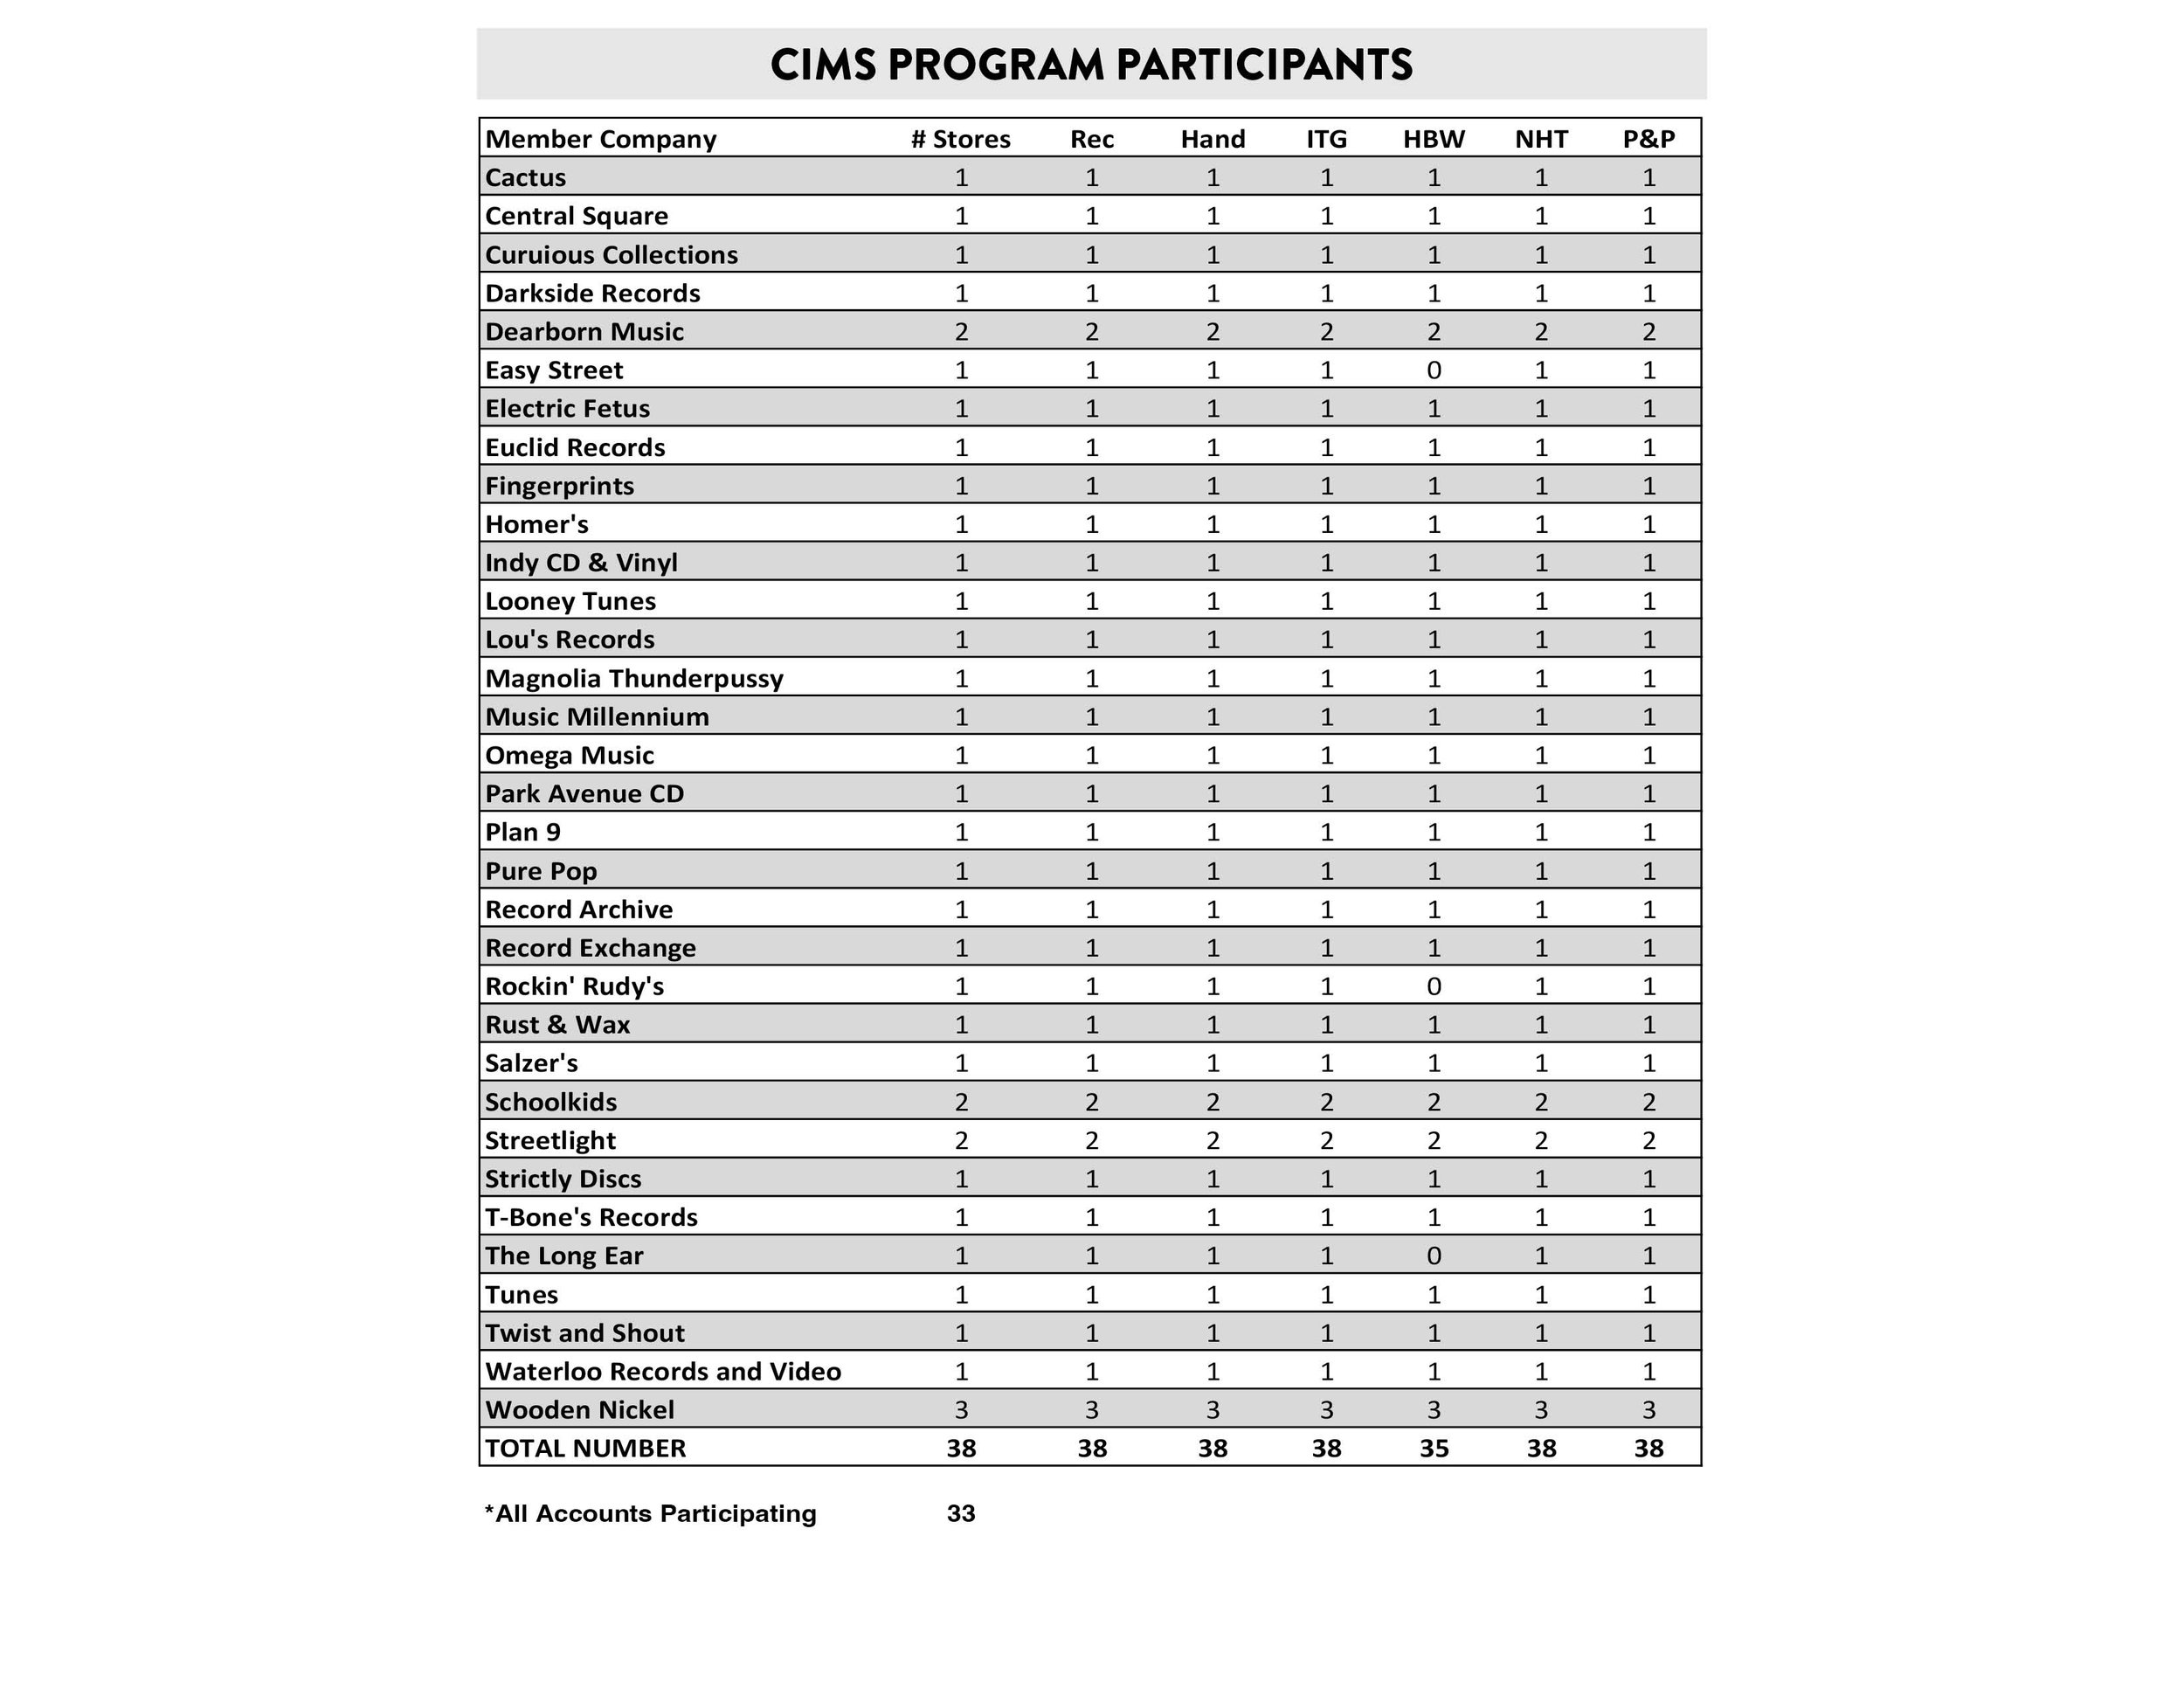 CIMS Programs PDF_1-247.jpg